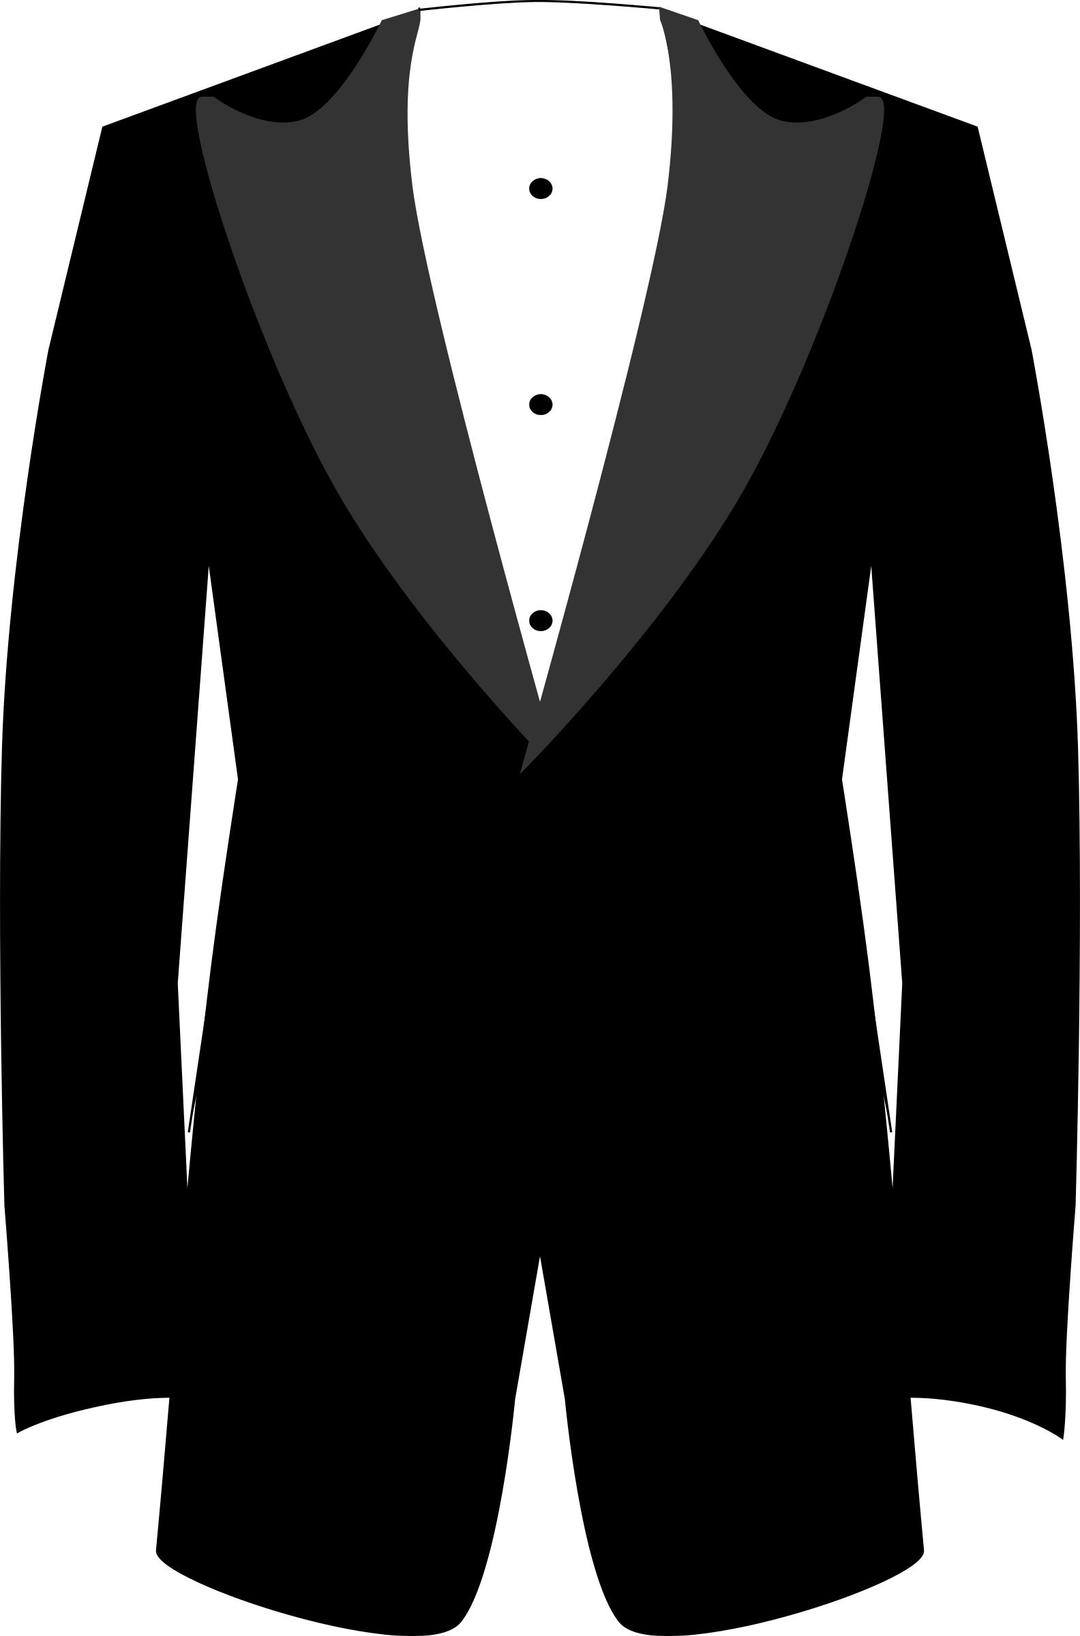 Basic Tuxedo png transparent